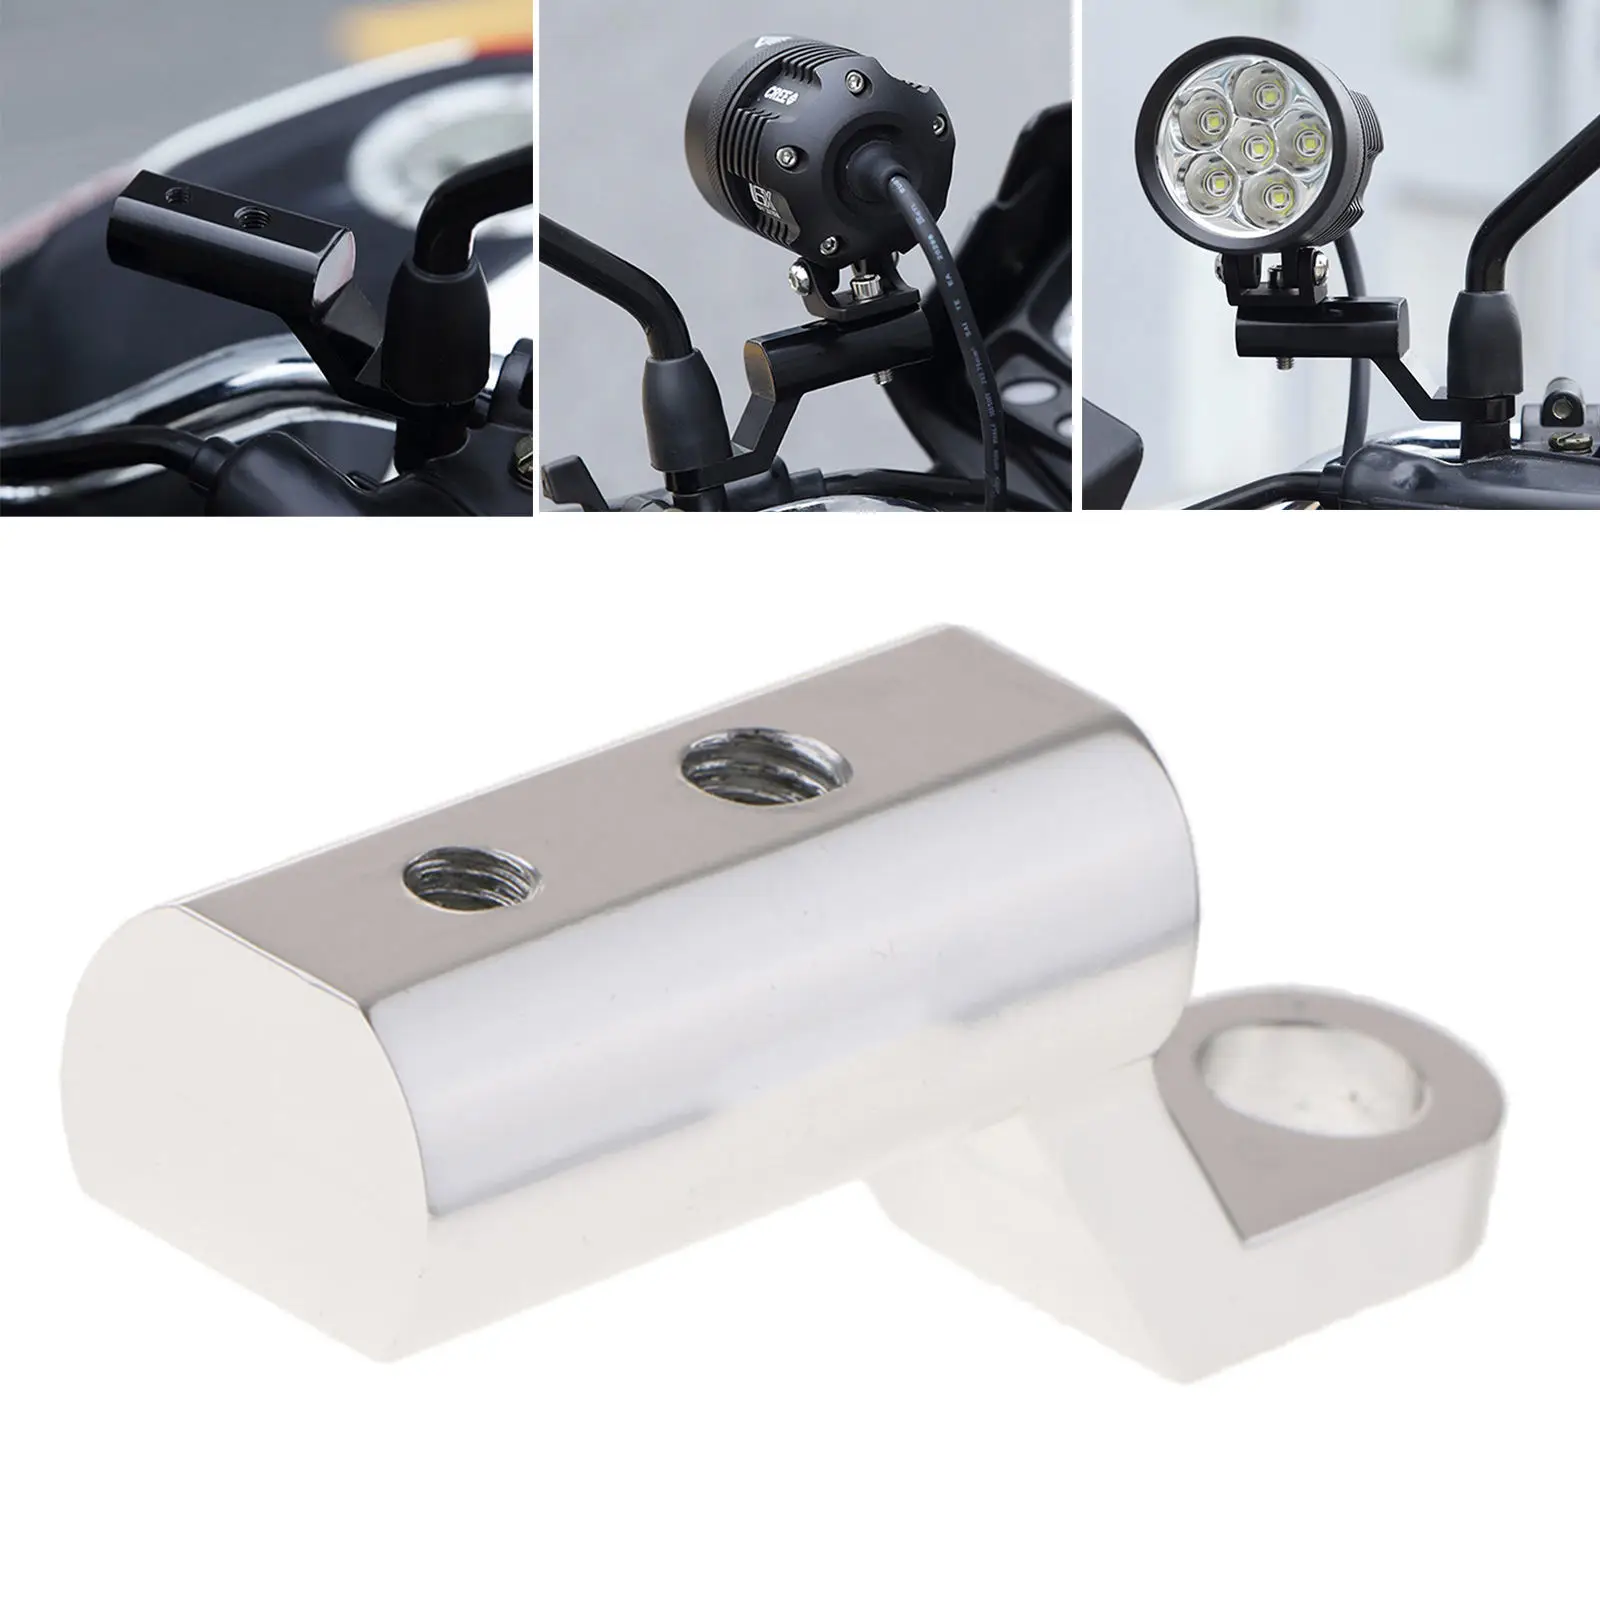  Motorcycle Rearview Mirror Expander Bracket Adapter Holder Mount